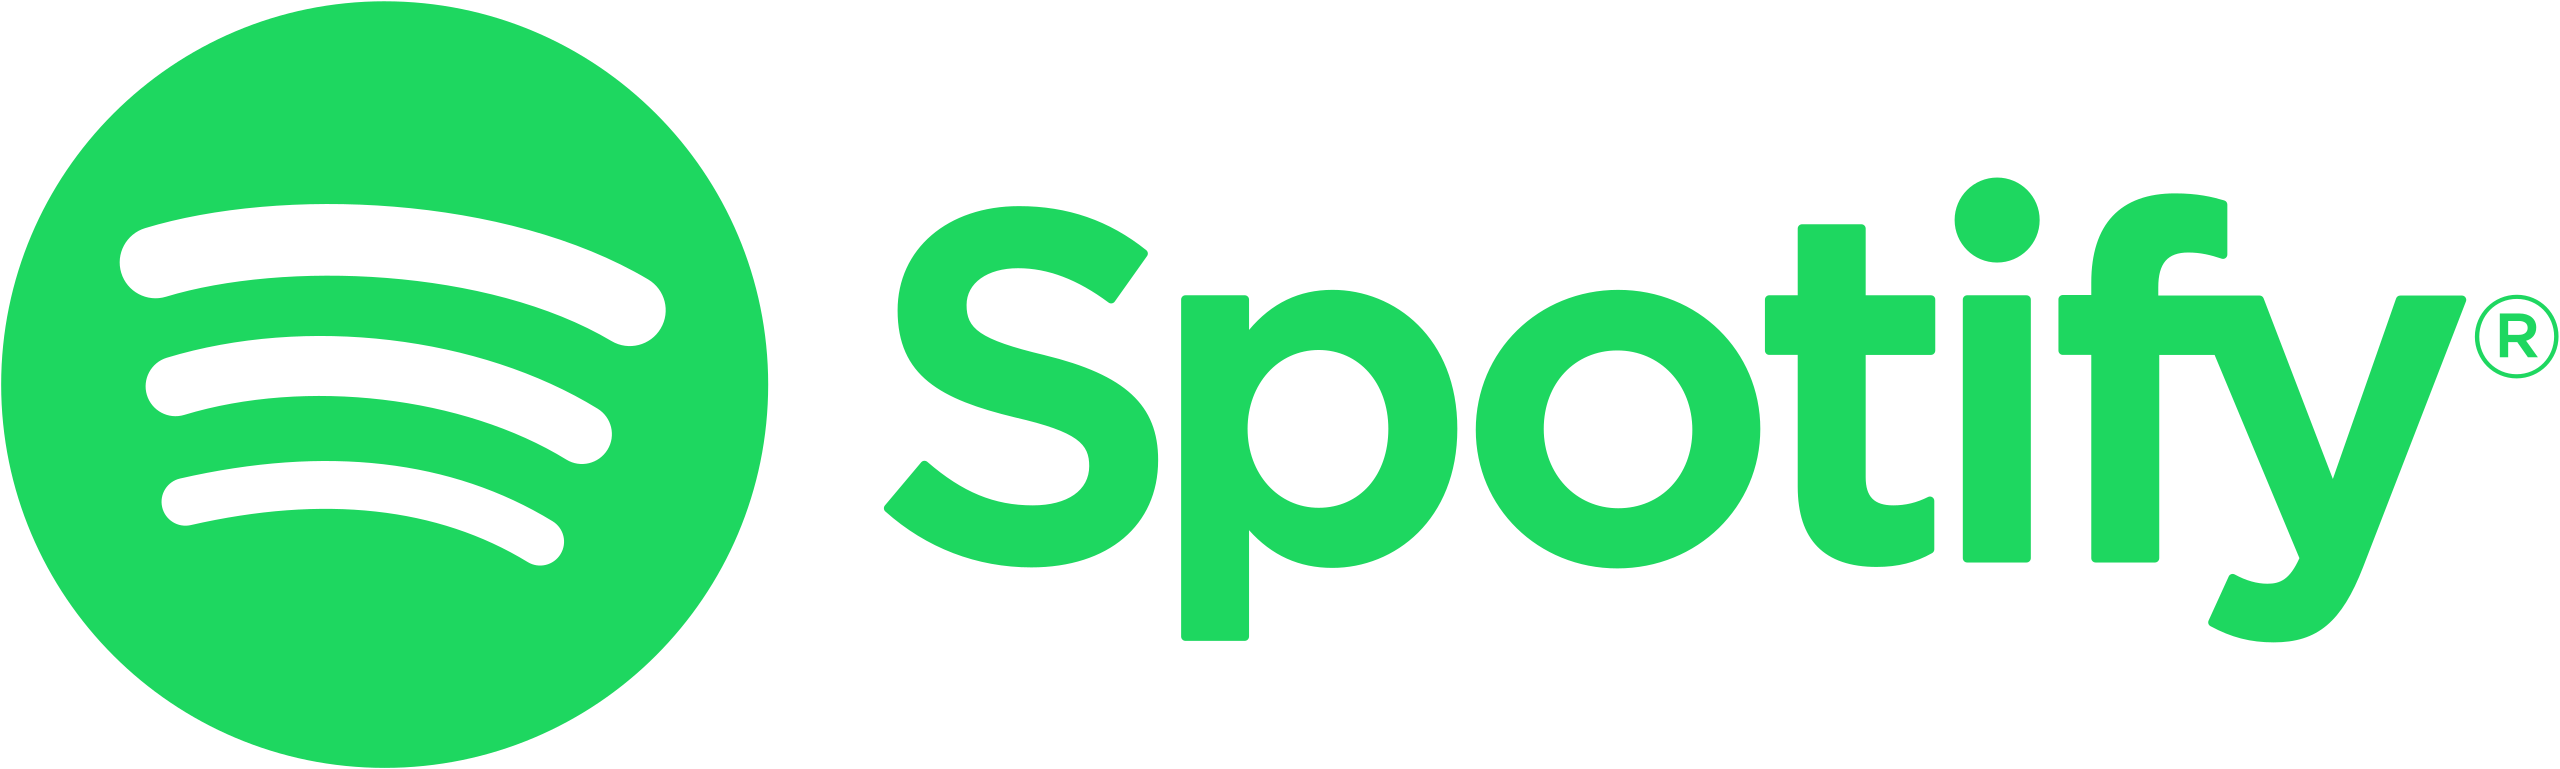 2560px Spotify logo with text